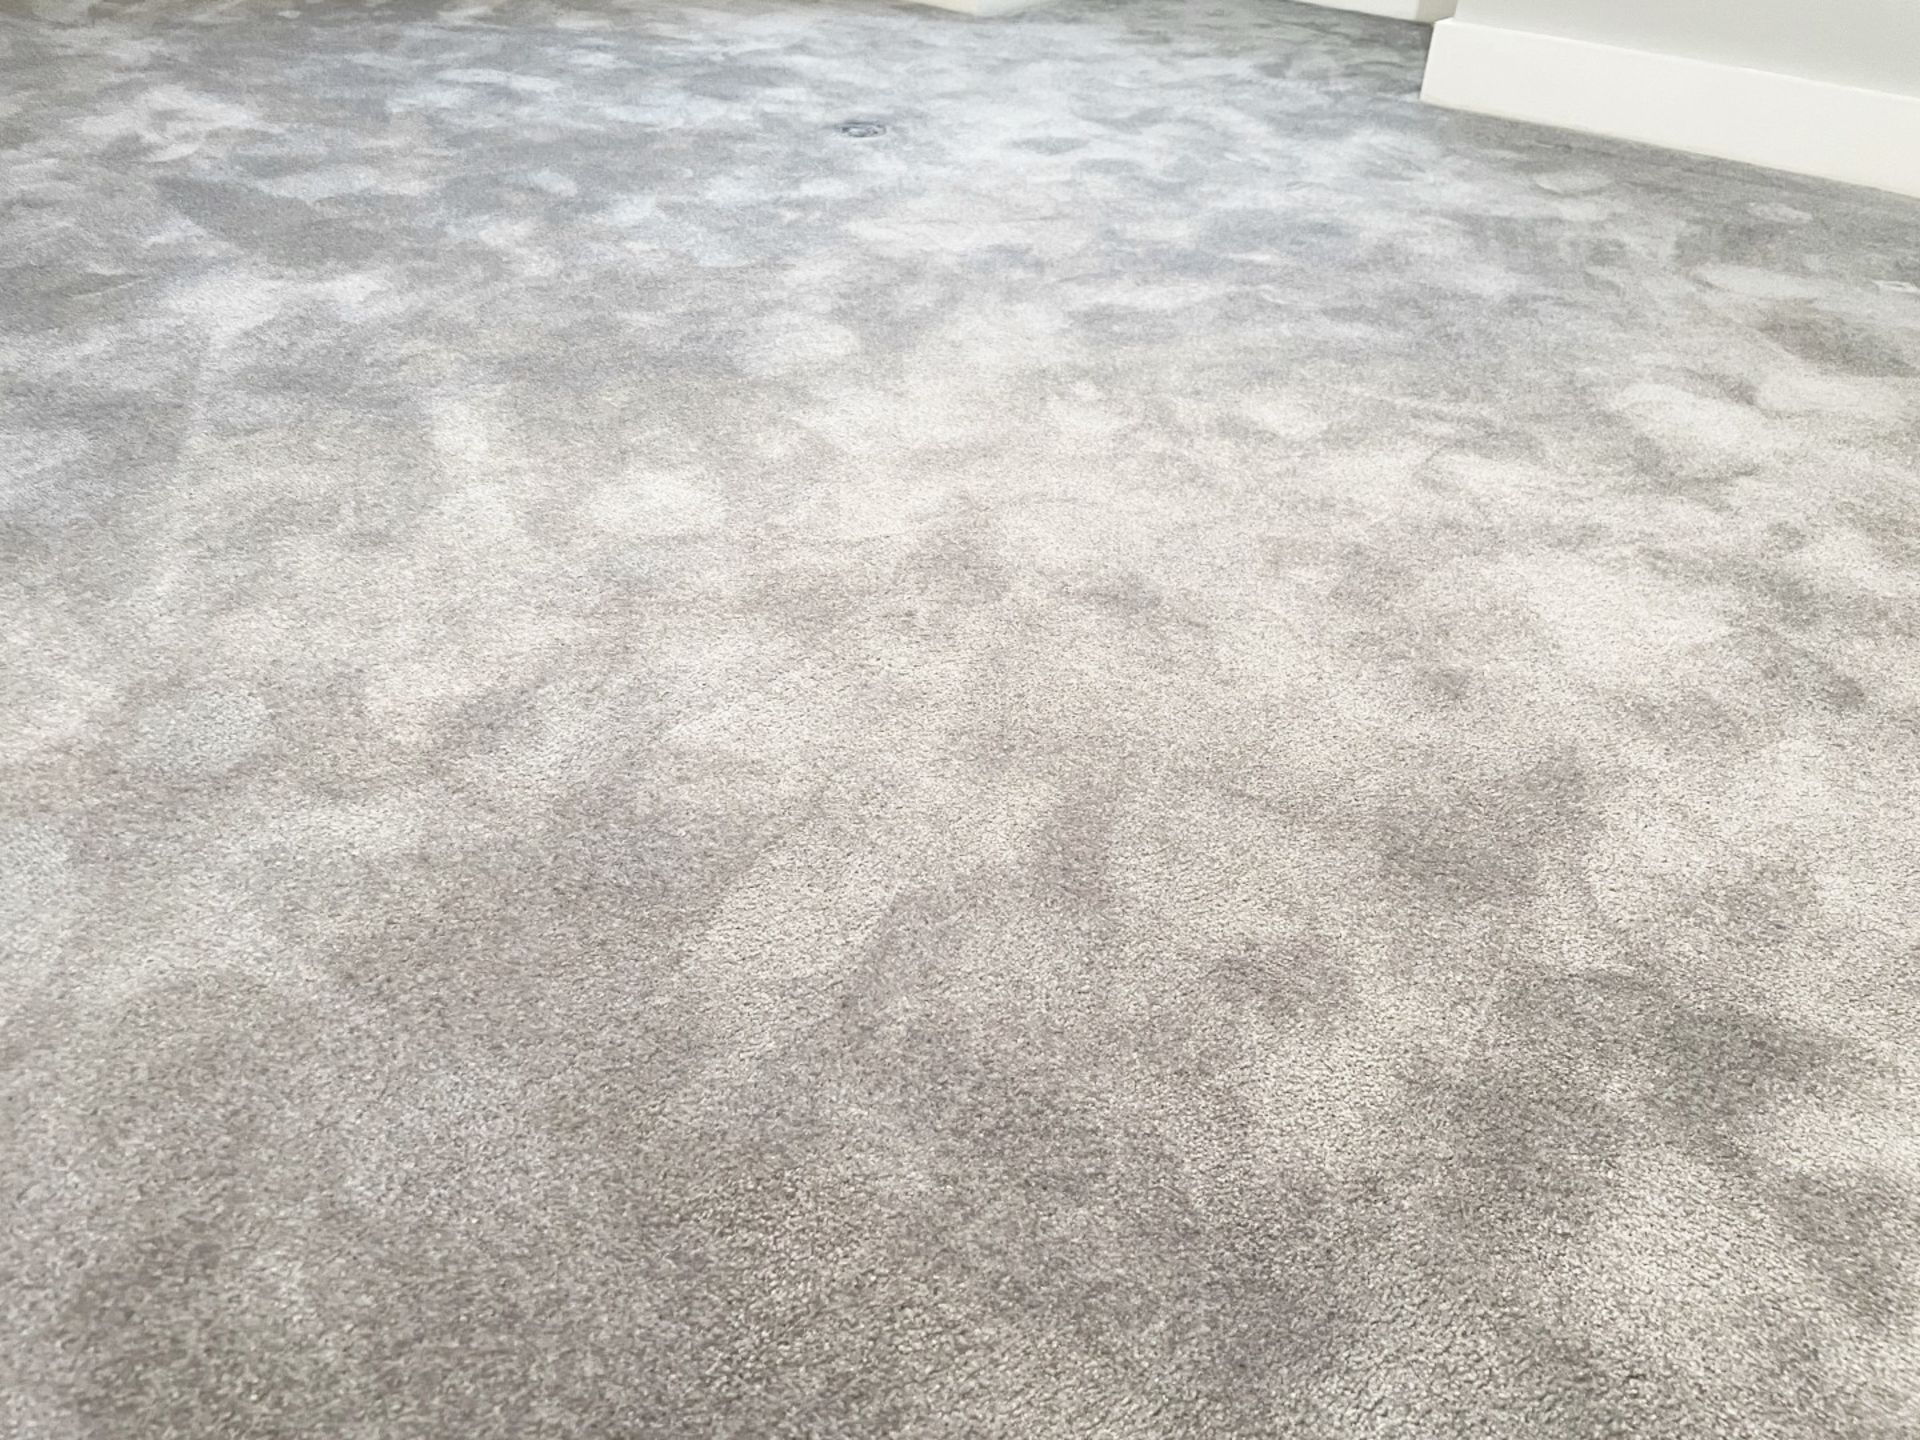 1 x Premium Bedroom Carpet In Grey (4.6 x 3.2m) - Ref: FRNT-BD/2ndFLR - CL742 - Image 2 of 6